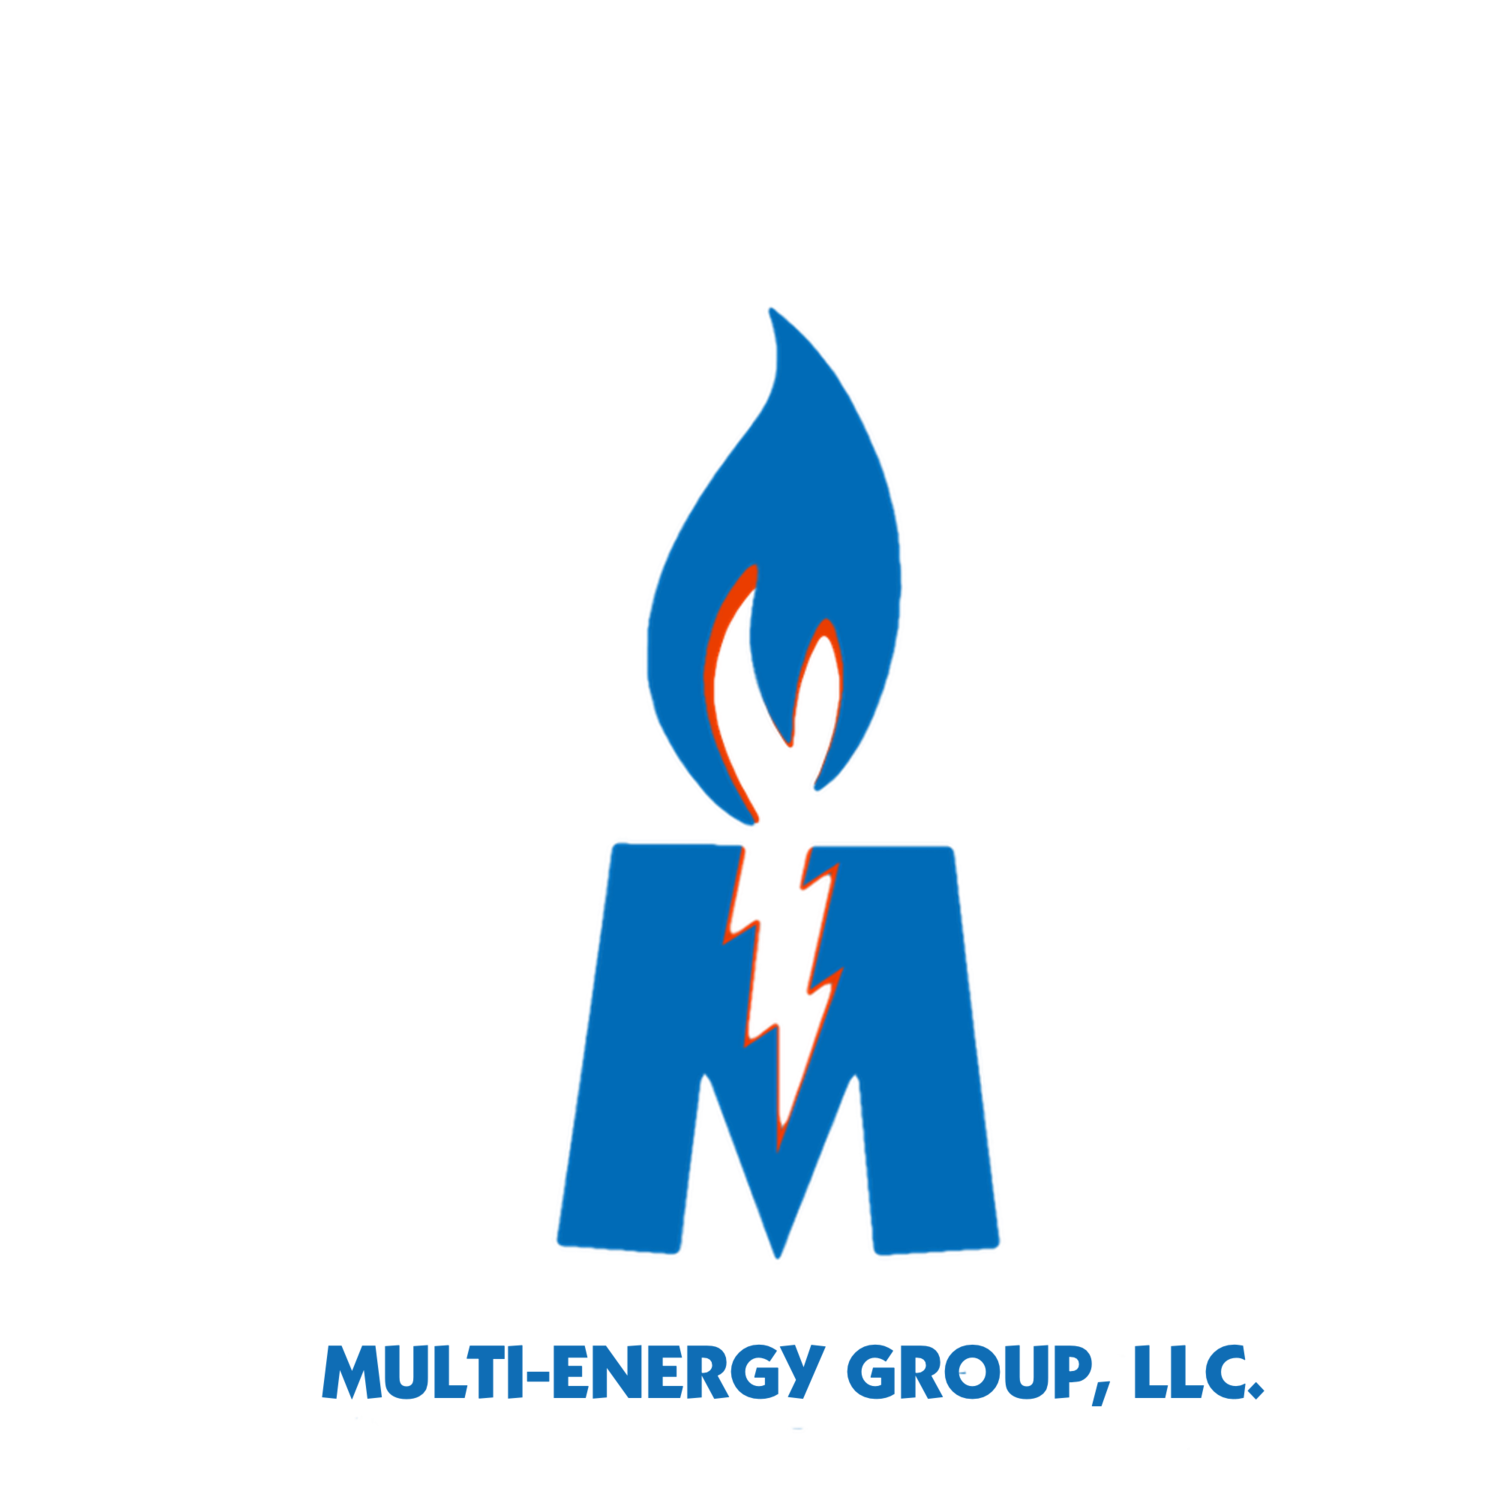 Multi-Energy Group, LLC.